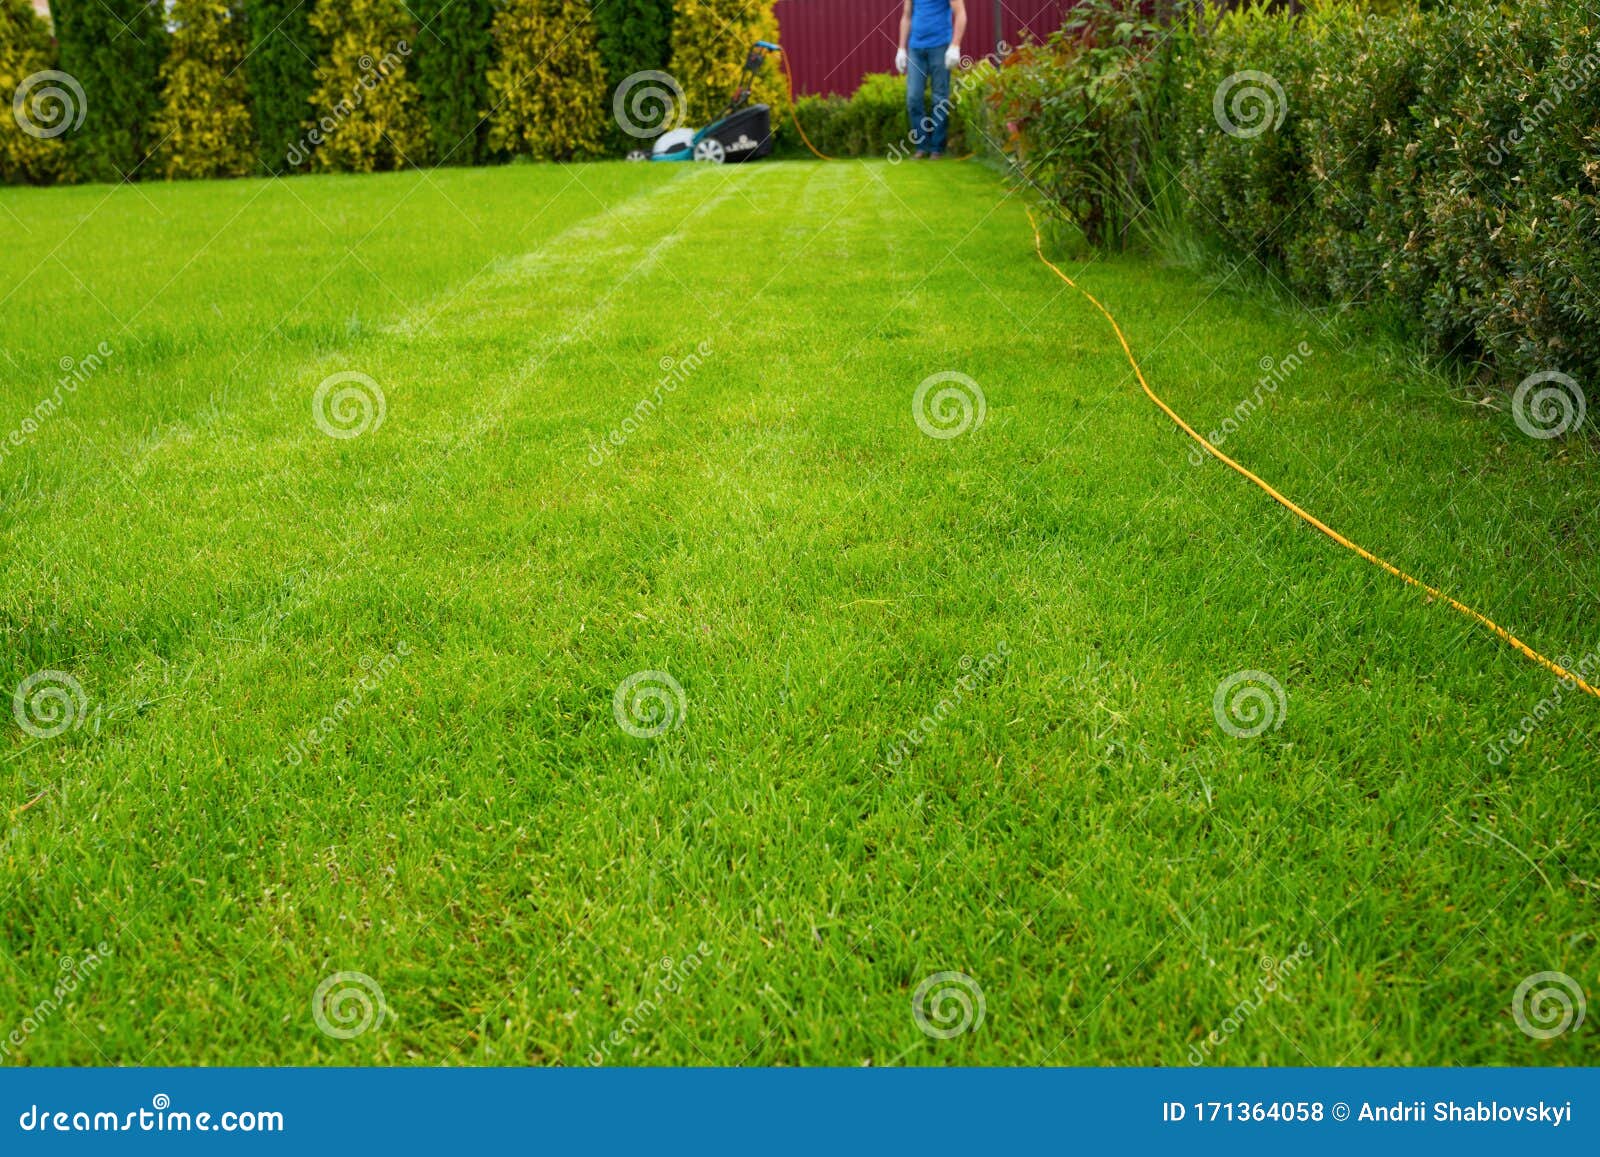 Freshly Mowed Green Grass in the Yard. Backyard Stock Photo - Image of